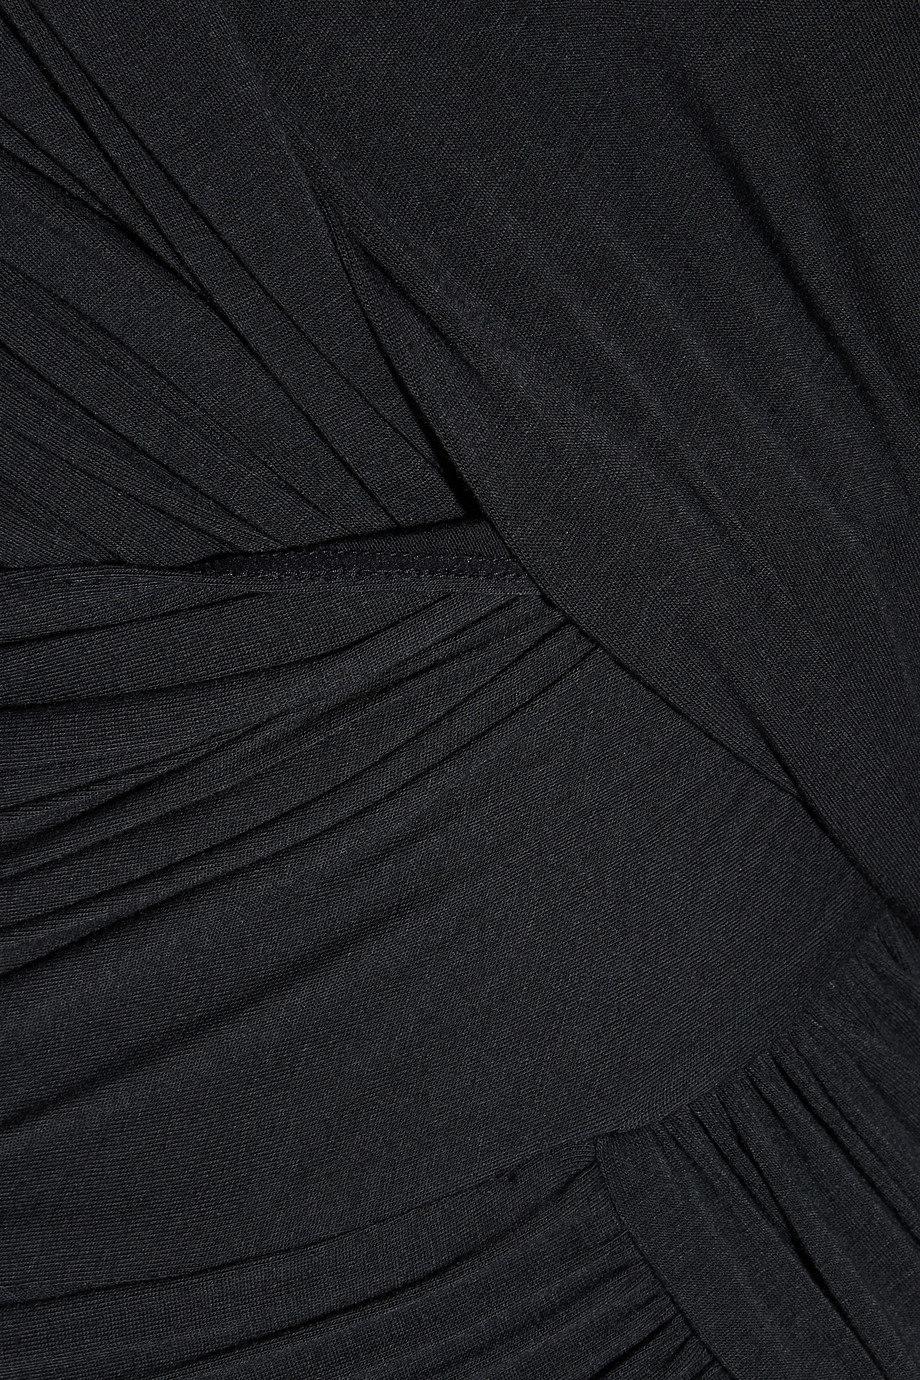 Lyst - Donna Karan Wrap-effect Stretch-jersey Maxi Dress in Black